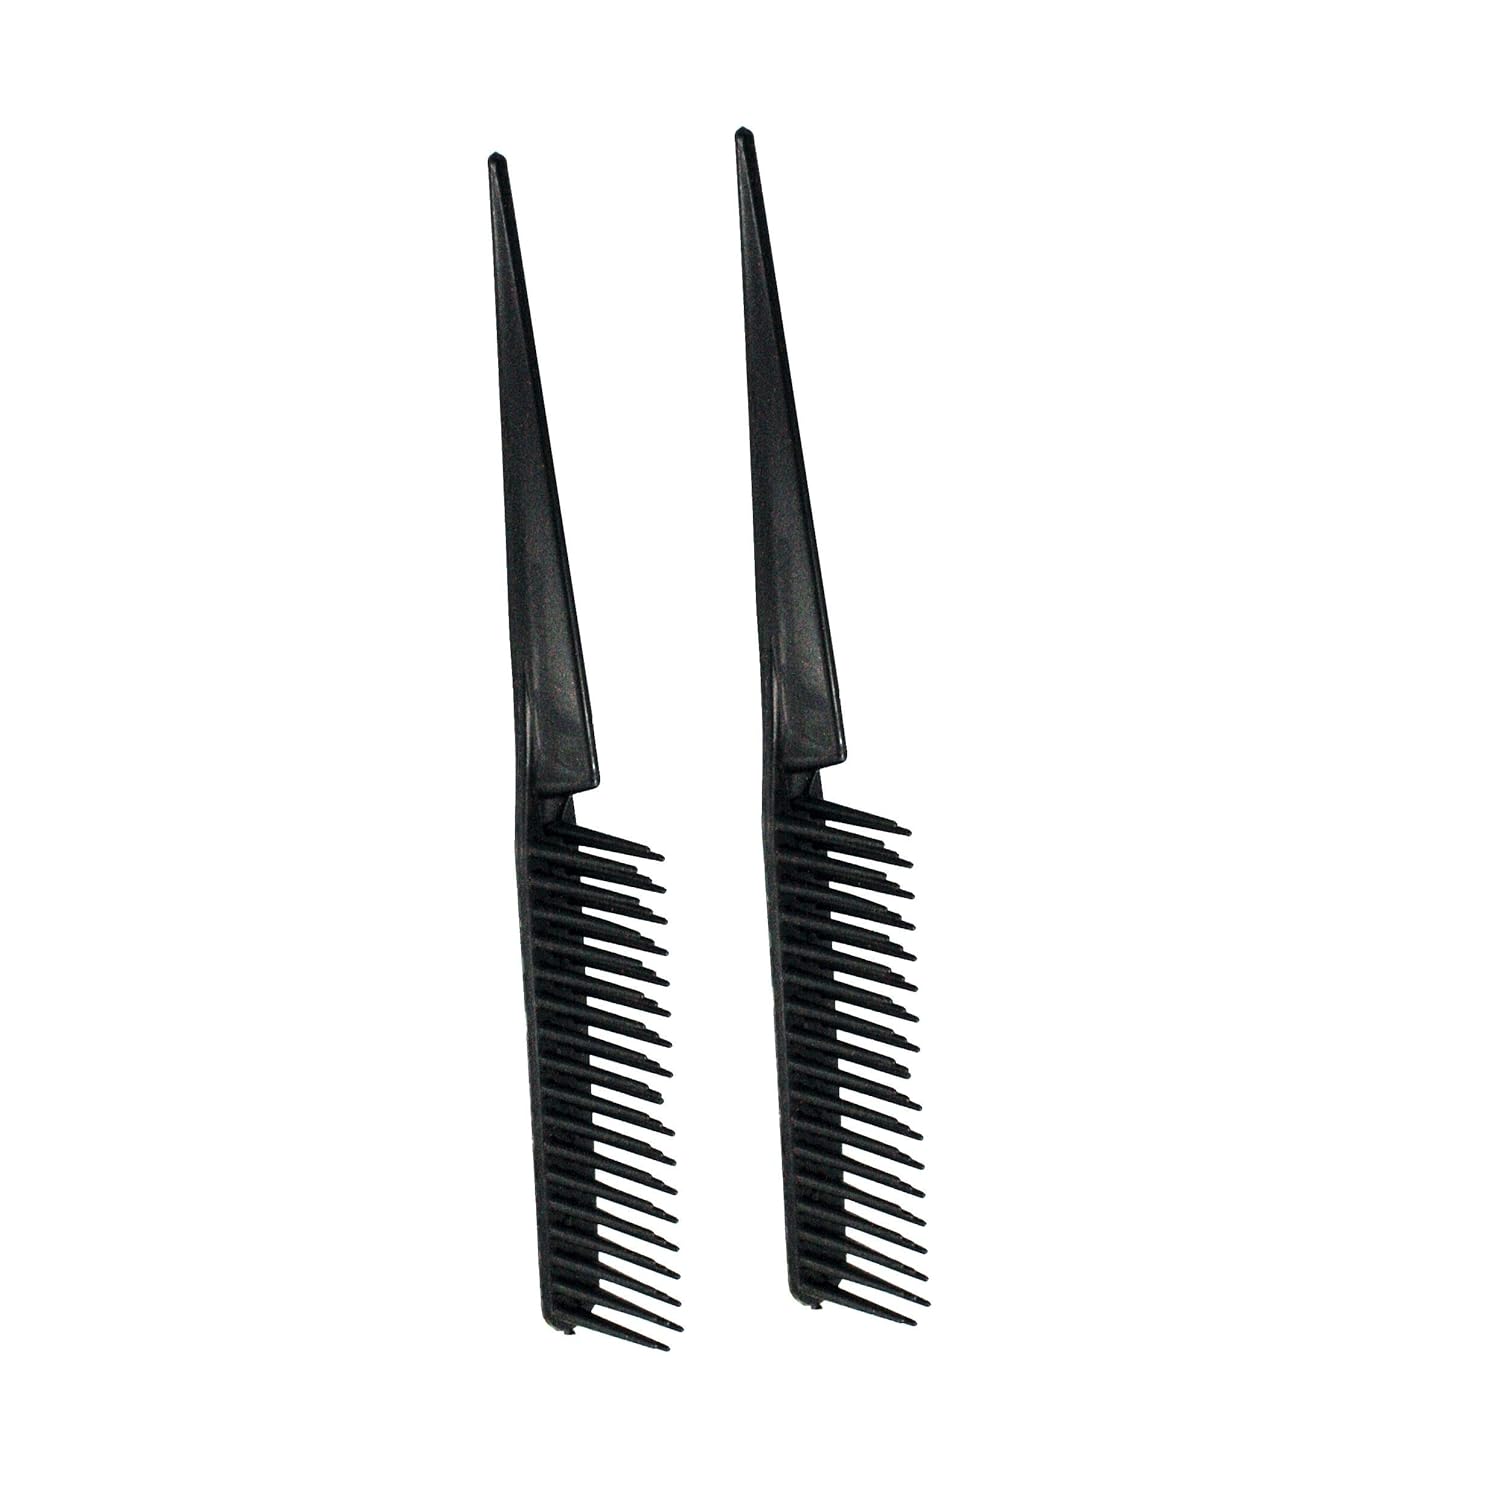 3 Row Styler Brush, 7 in | Hair Styling Comb | Travel Hairbrush for Women | Rat Tail Comb for Detangling (Black)